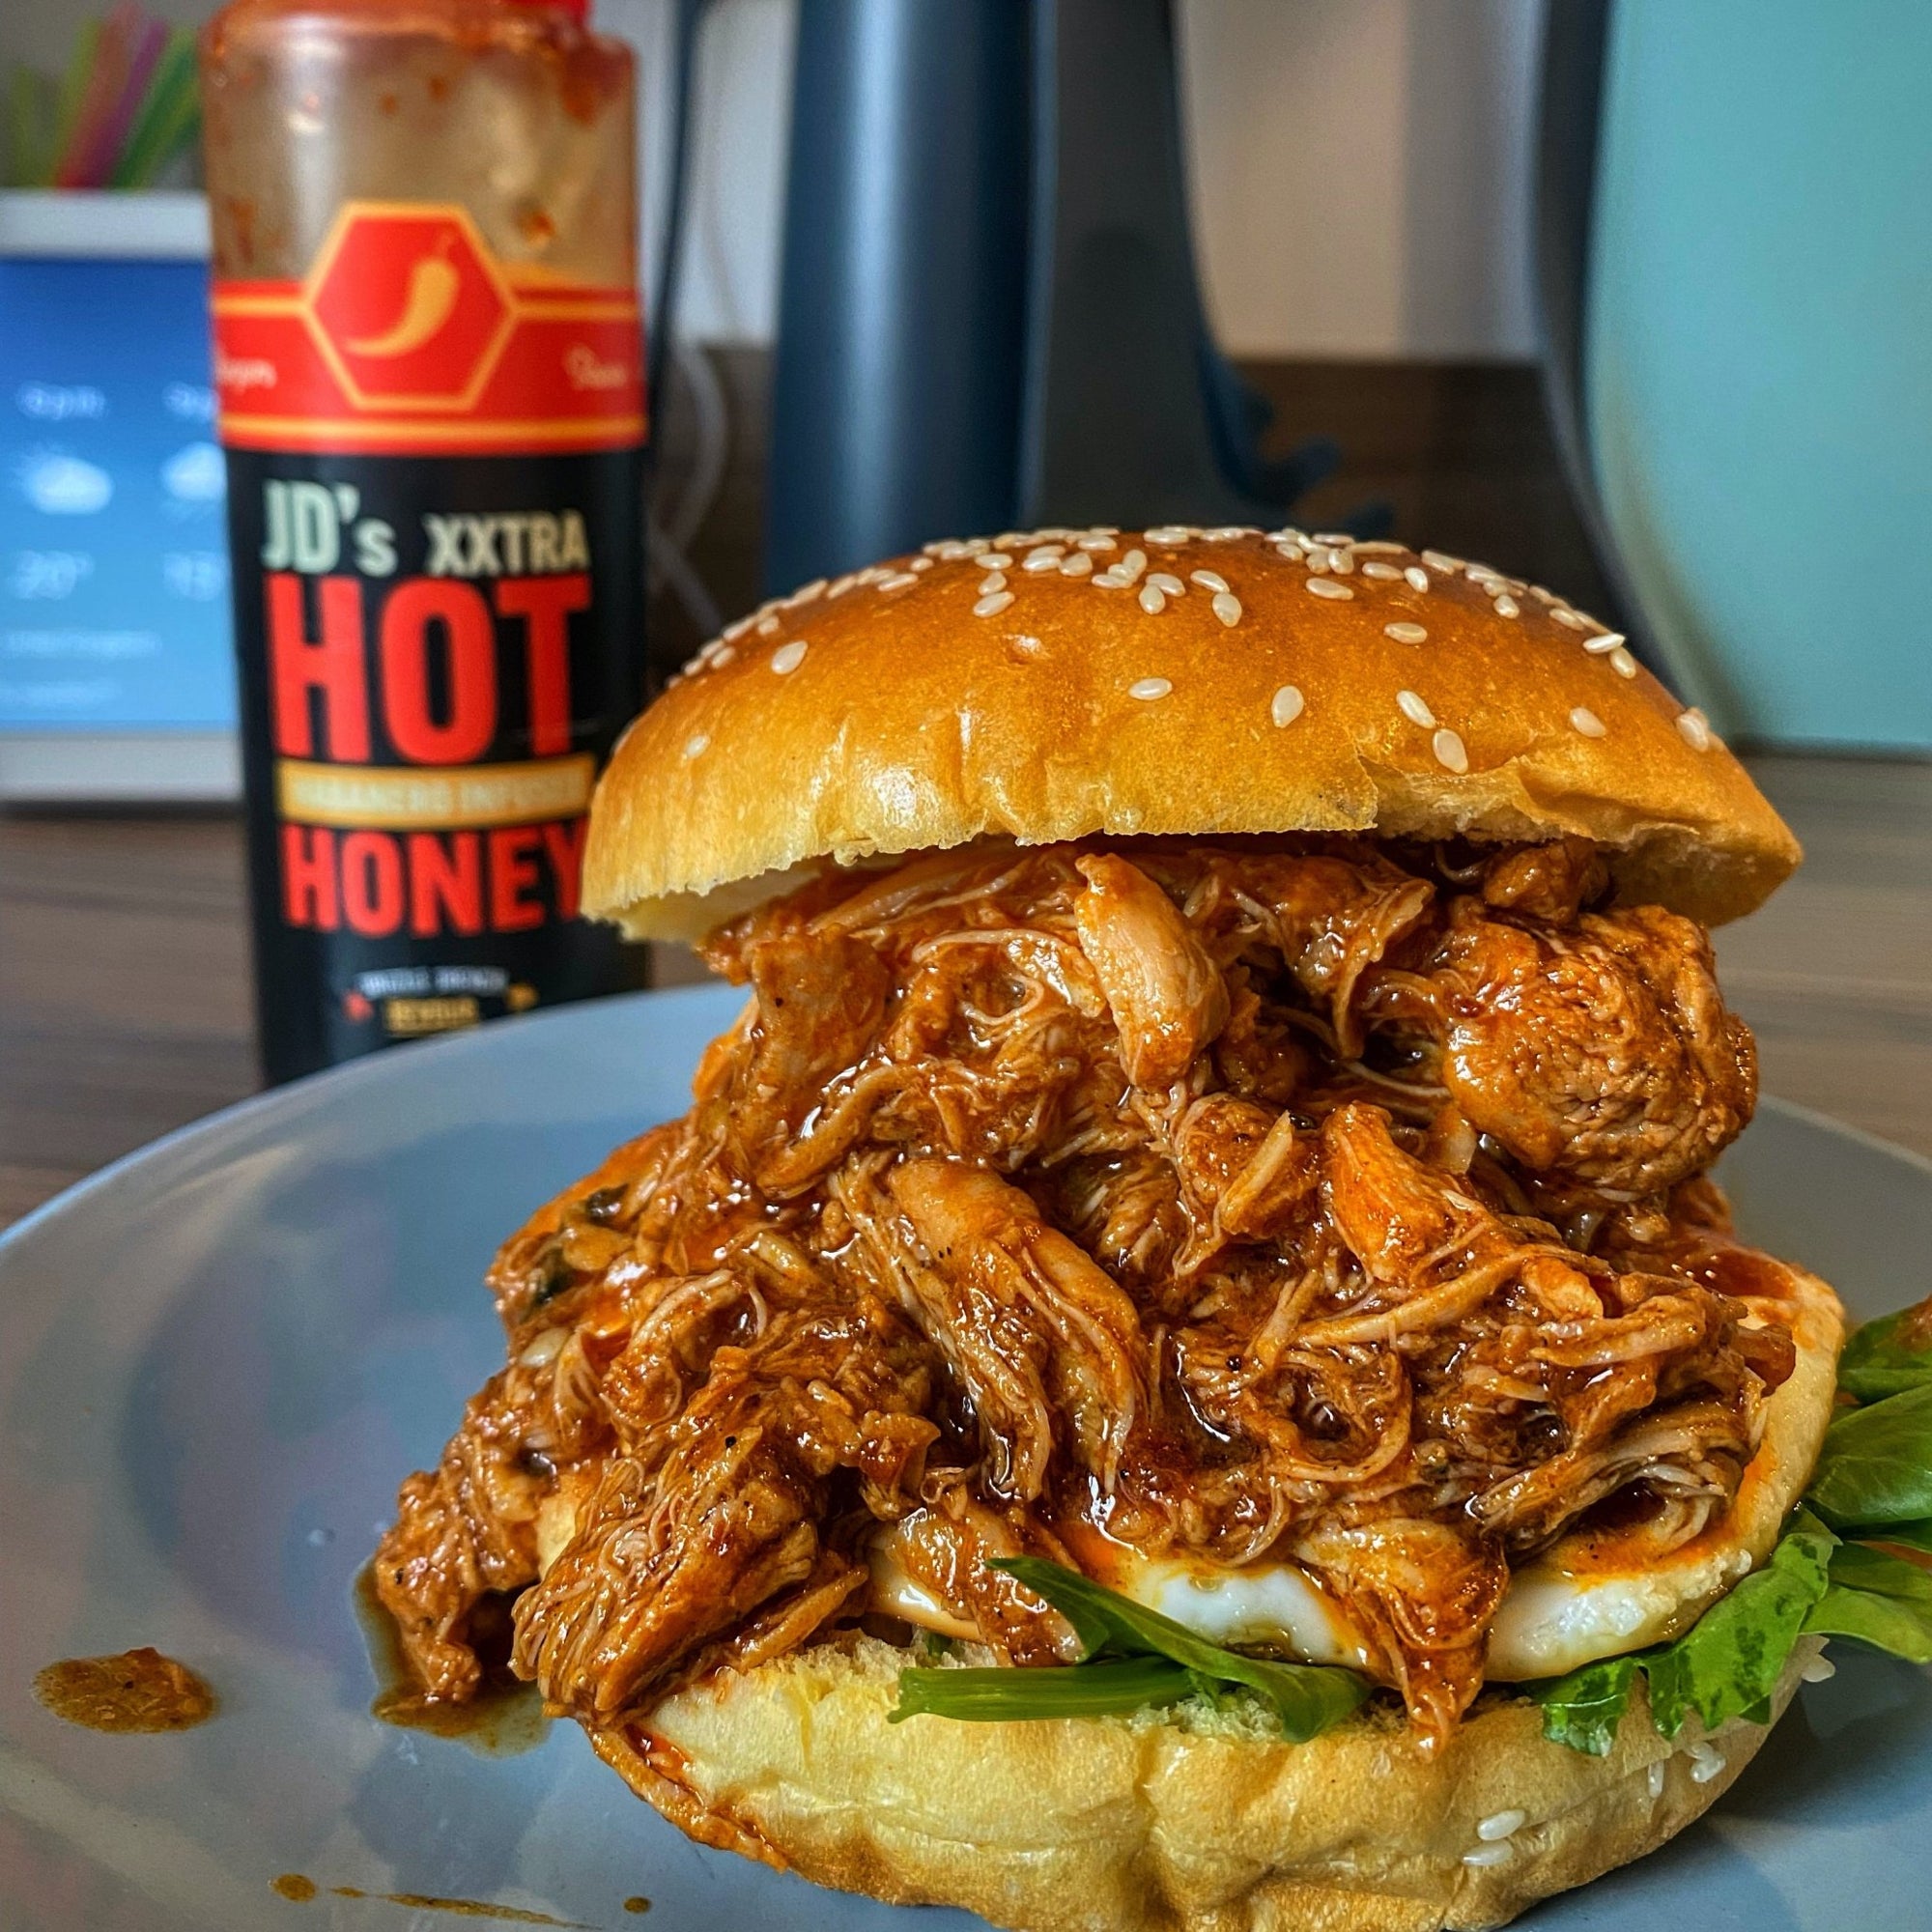 XXTRA Hot Pulled Pork Burgers - JD's Hot Honey